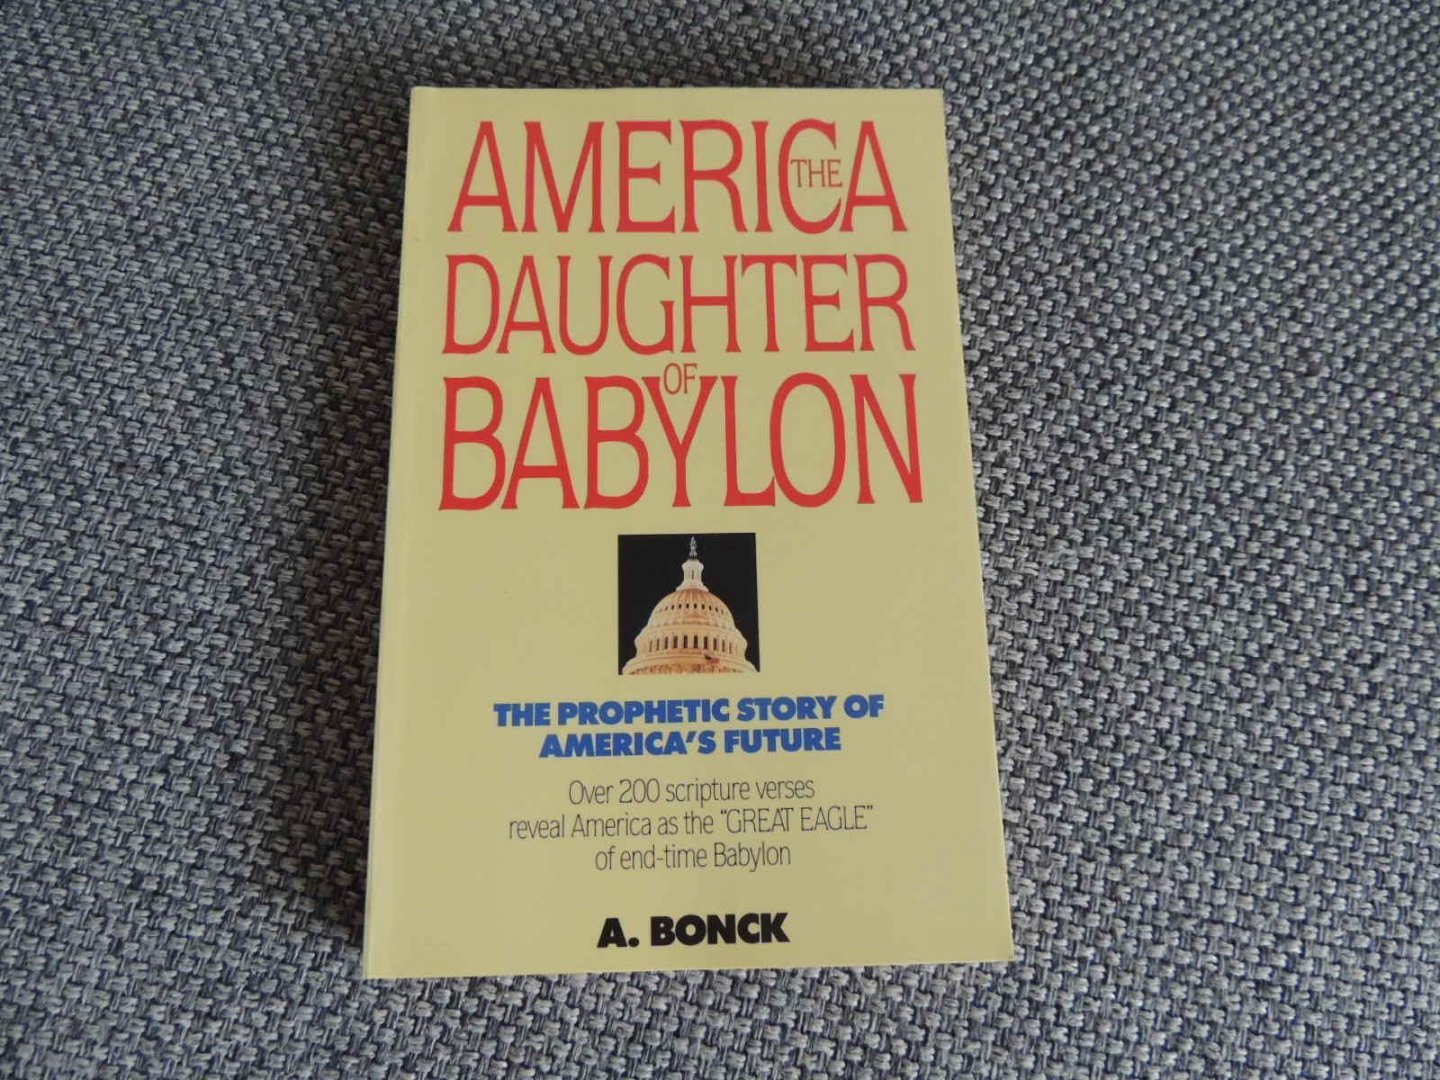 Bonck Allen - America the Daughter of Babylon